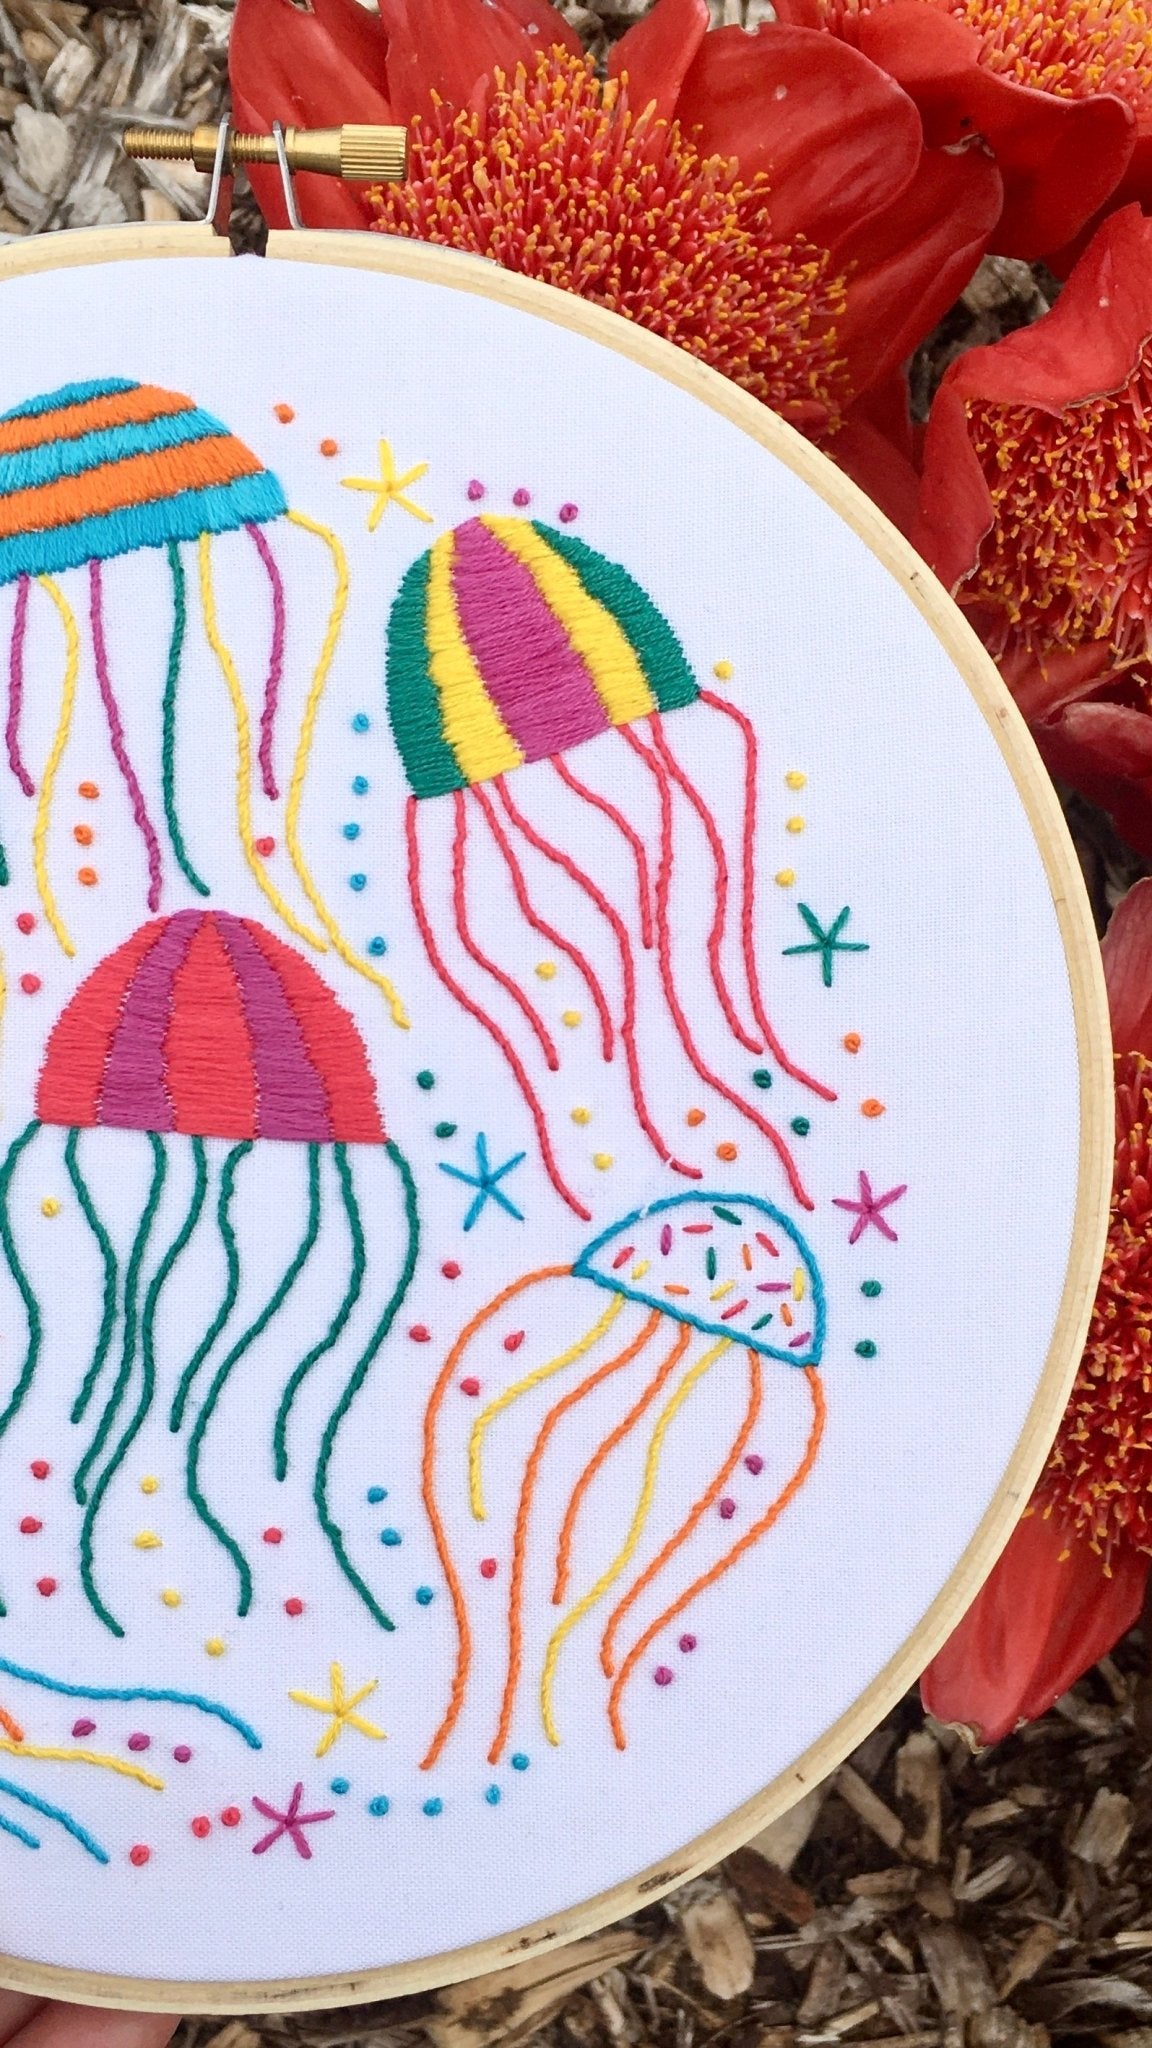 Electric Jellyfish Modern Embroidery Kit - Craft Make Do